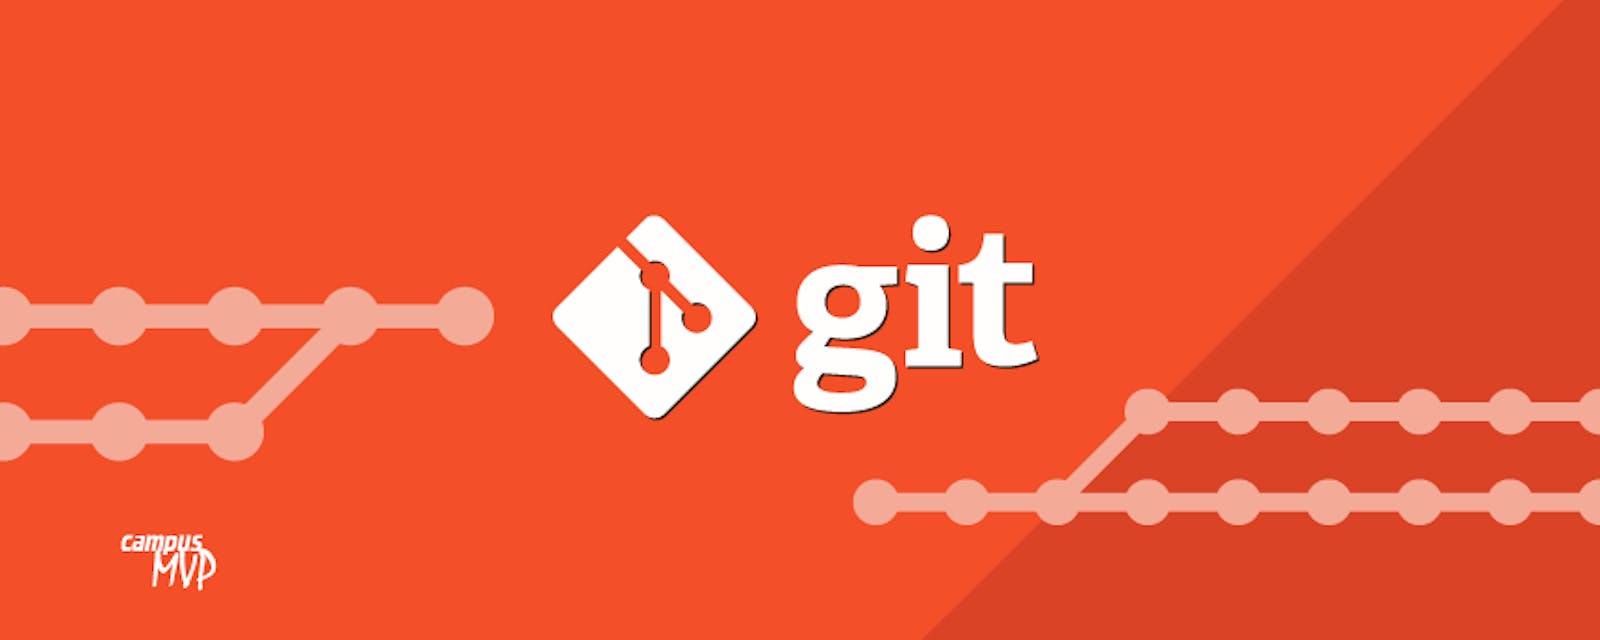 Git Tasks/Workloads